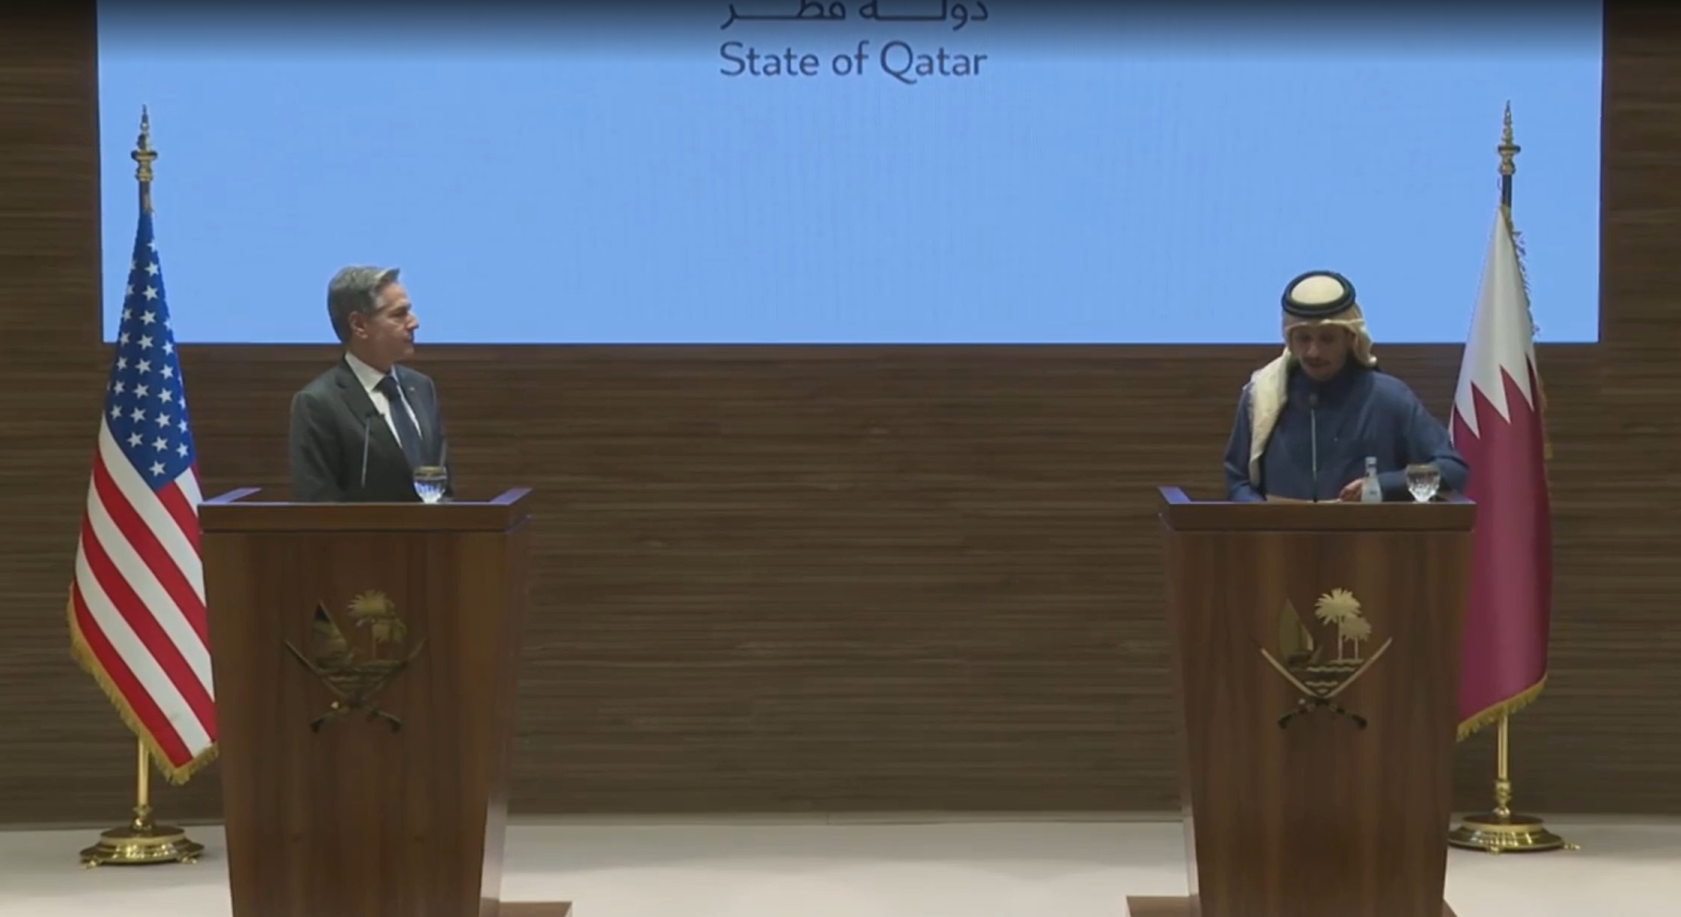 US Secretary of State Antony Blinken at a press conference in Doha with Qatar's Prime Minister Sheikh Mohammed bin Abdulrahman bin Jassim Al Thani, 6-2-24